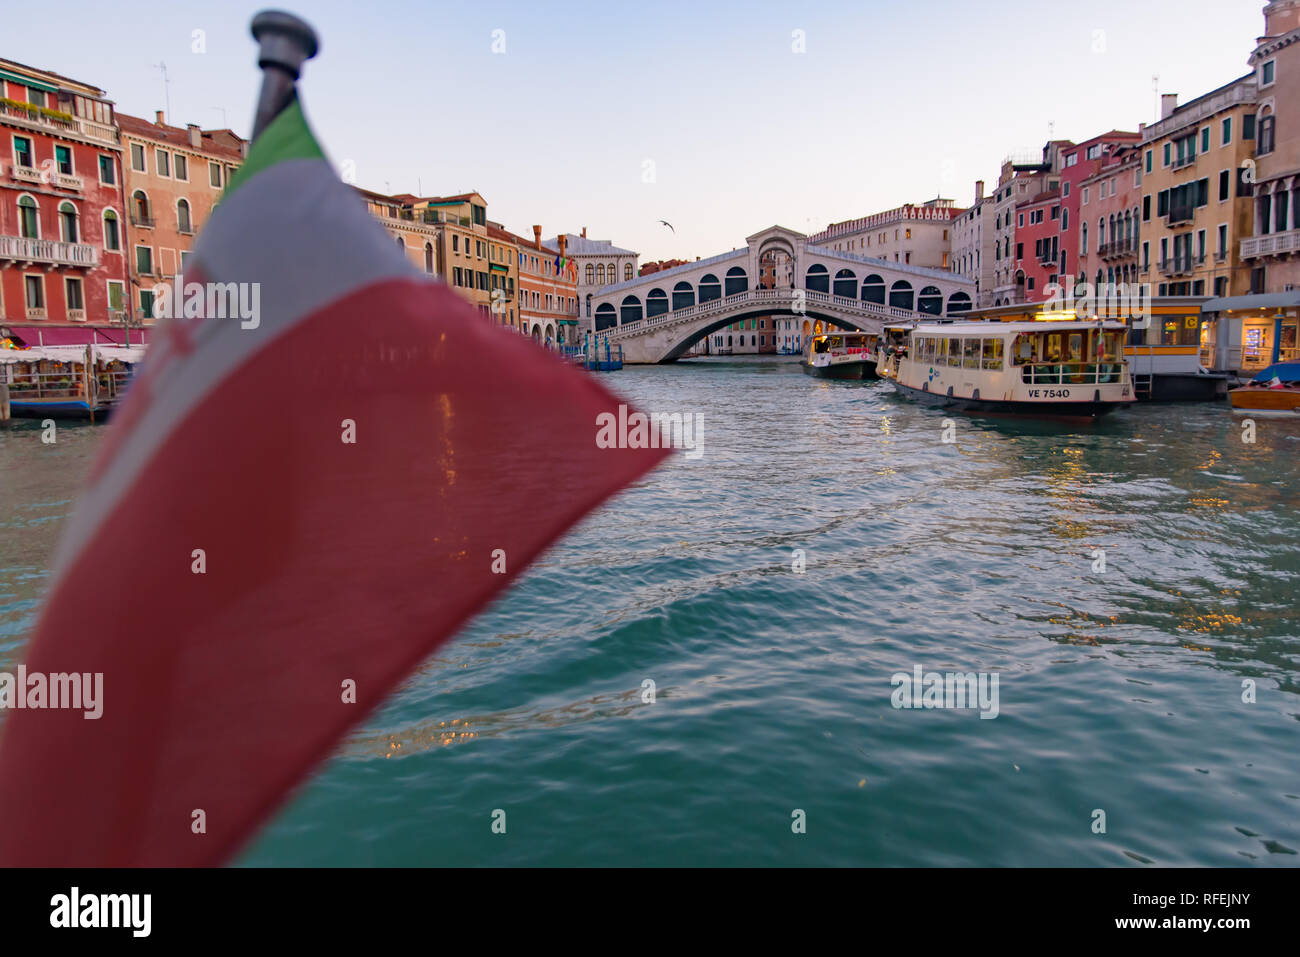 Rialto Bridge (Ponte de Rialto) across Grand Canal at sunrise / sunset time with Italian flag, Venice, Italy Stock Photo